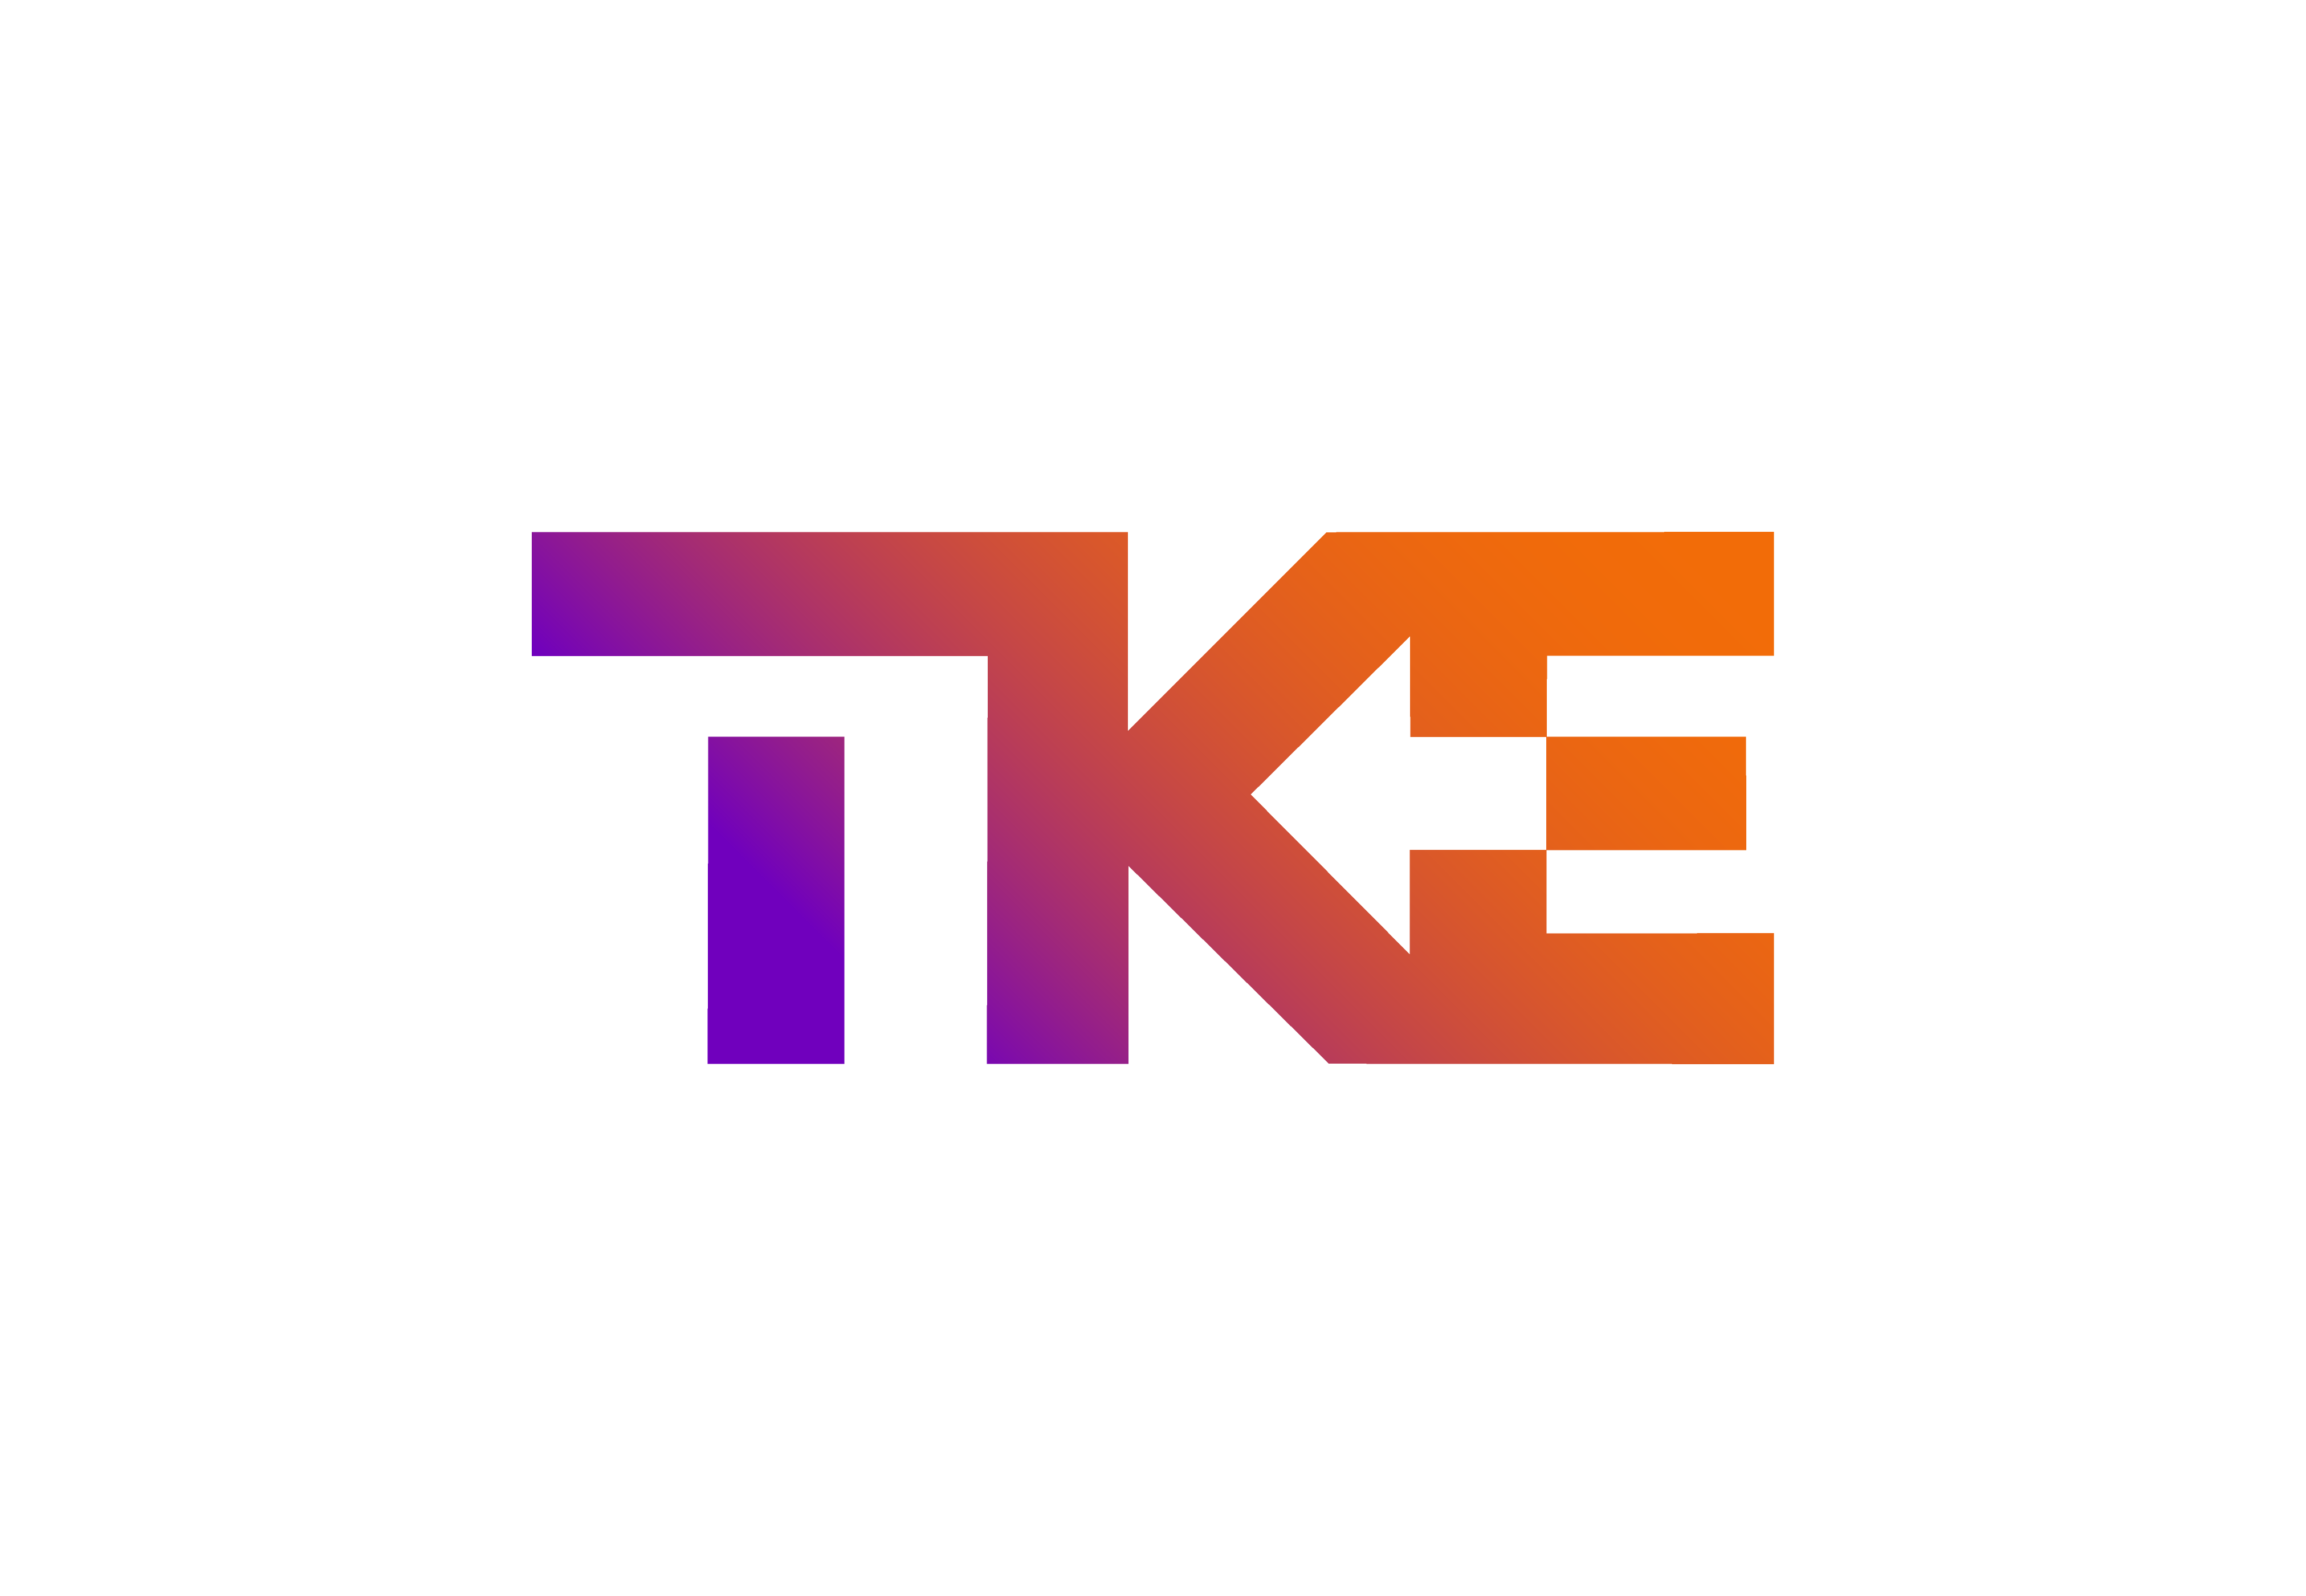 tke_logo_rgb_standard_gradient.png